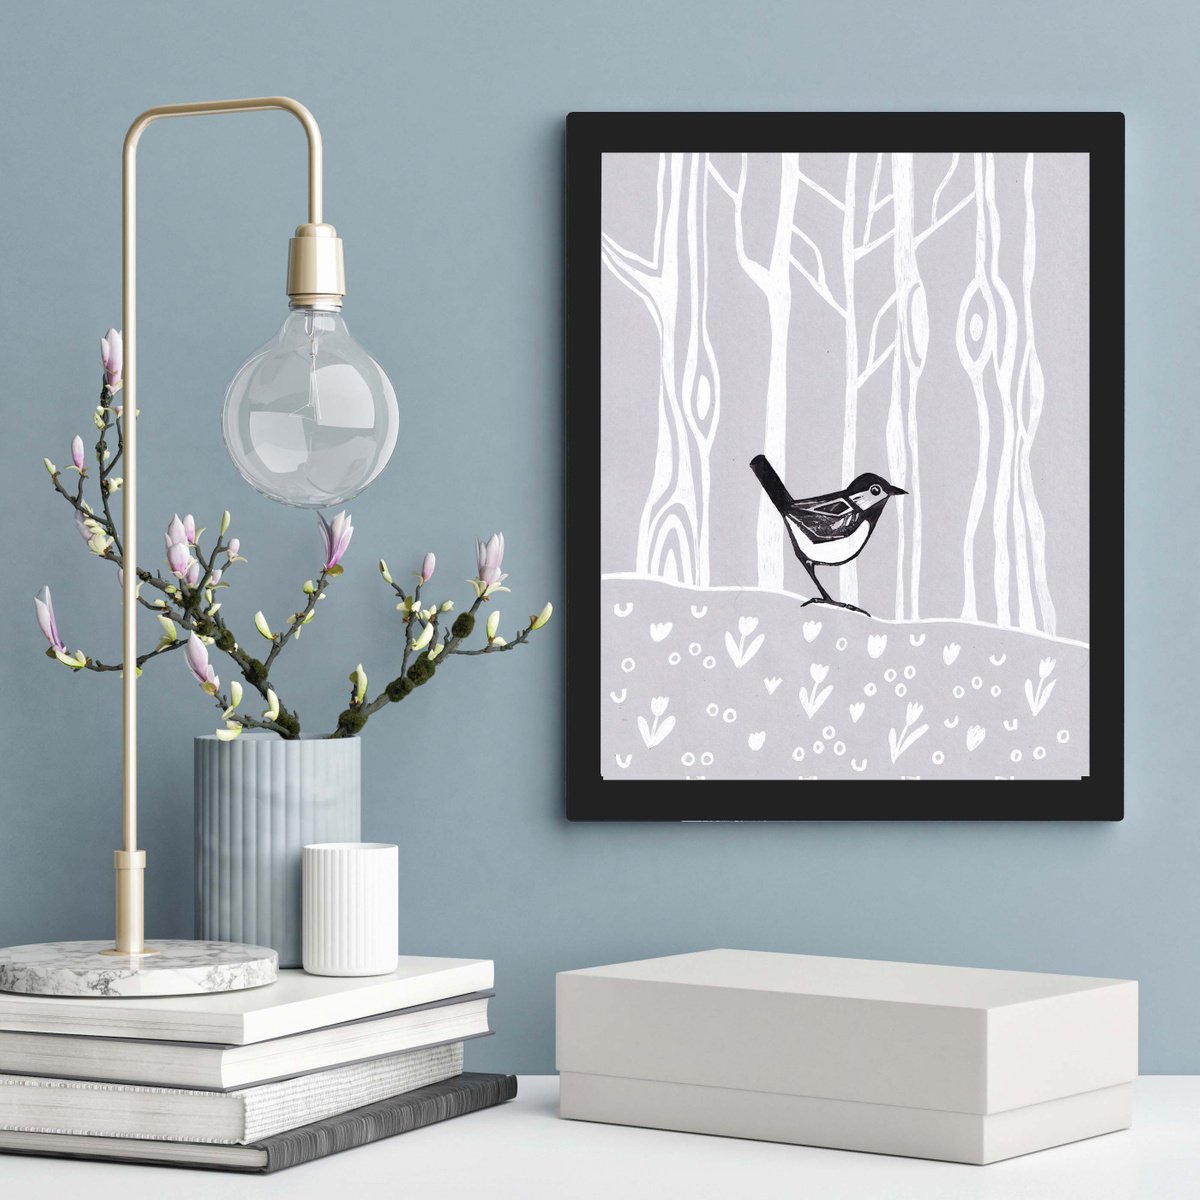 Chickadee bird in the wood by Olha Gitman